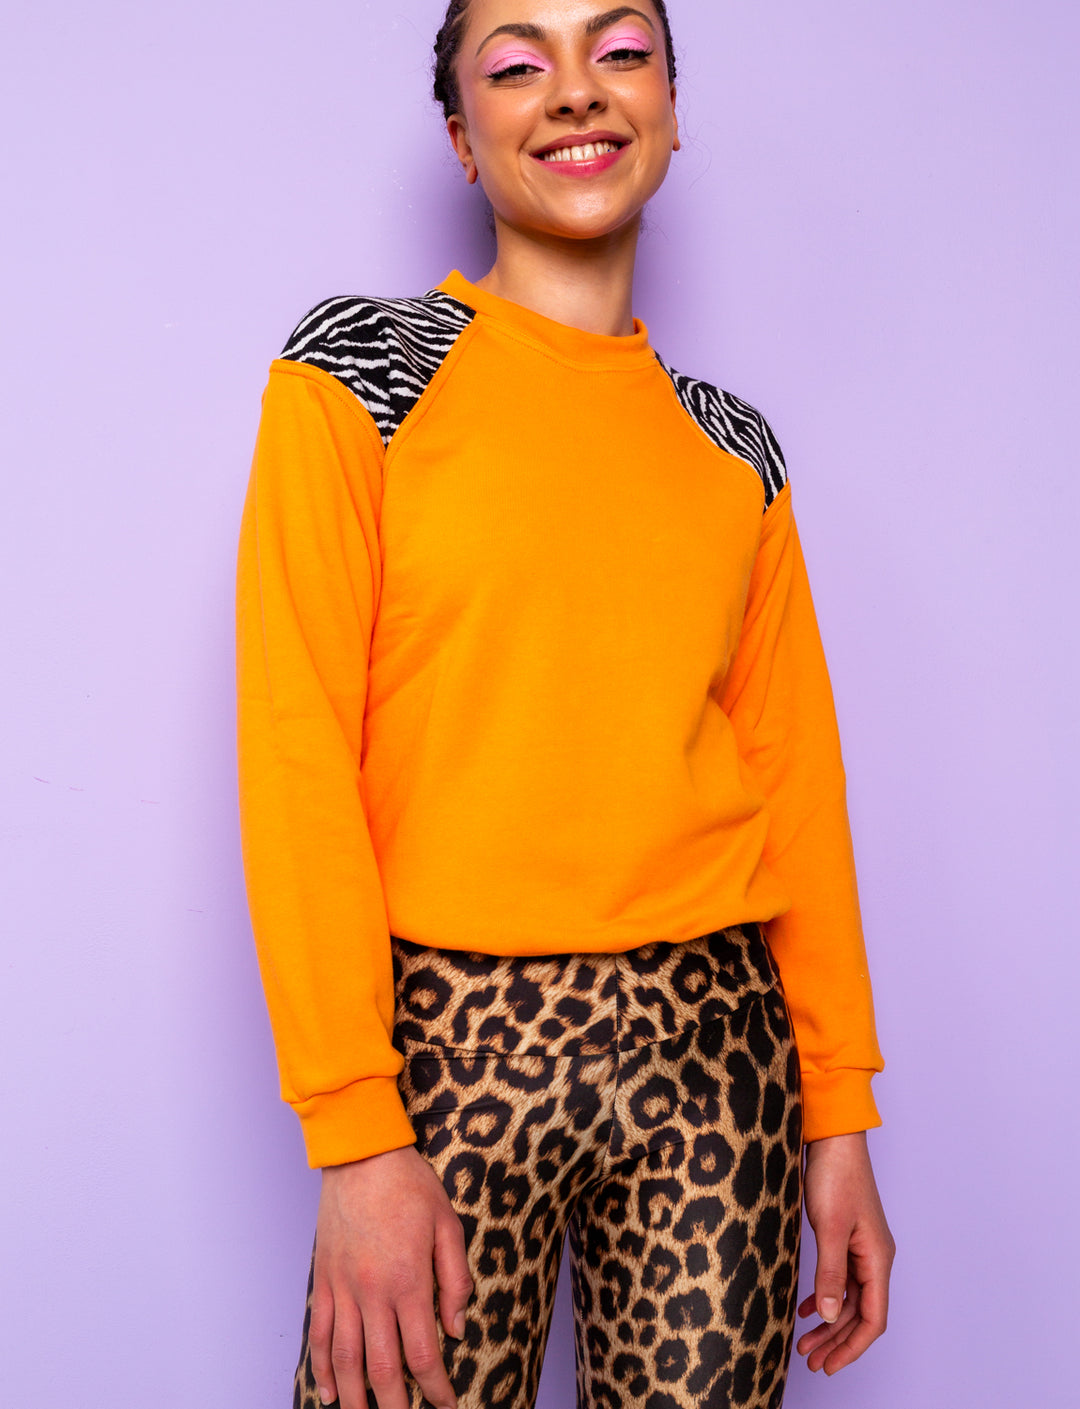 woman wearing orange sweatshirt with zebra print shoulders and leopard print leggings